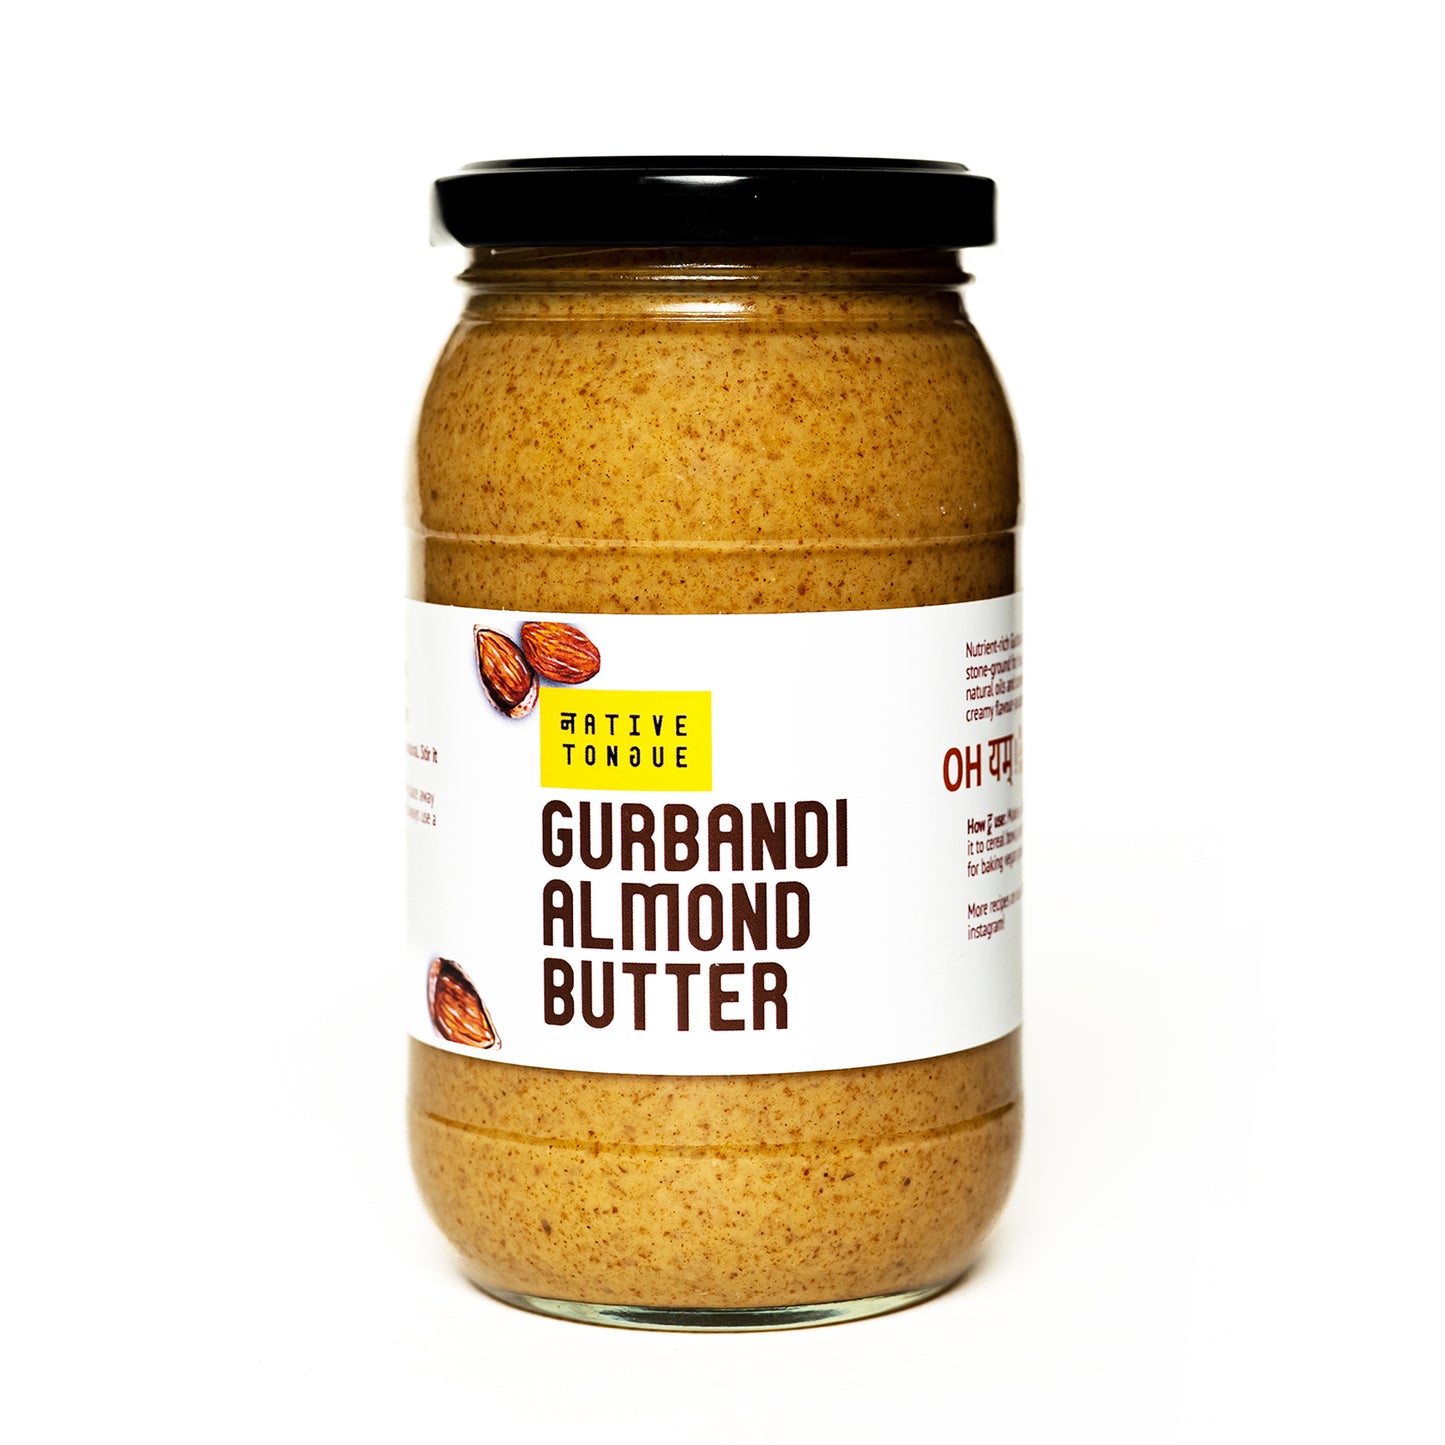 Gurbandi Almond Butter